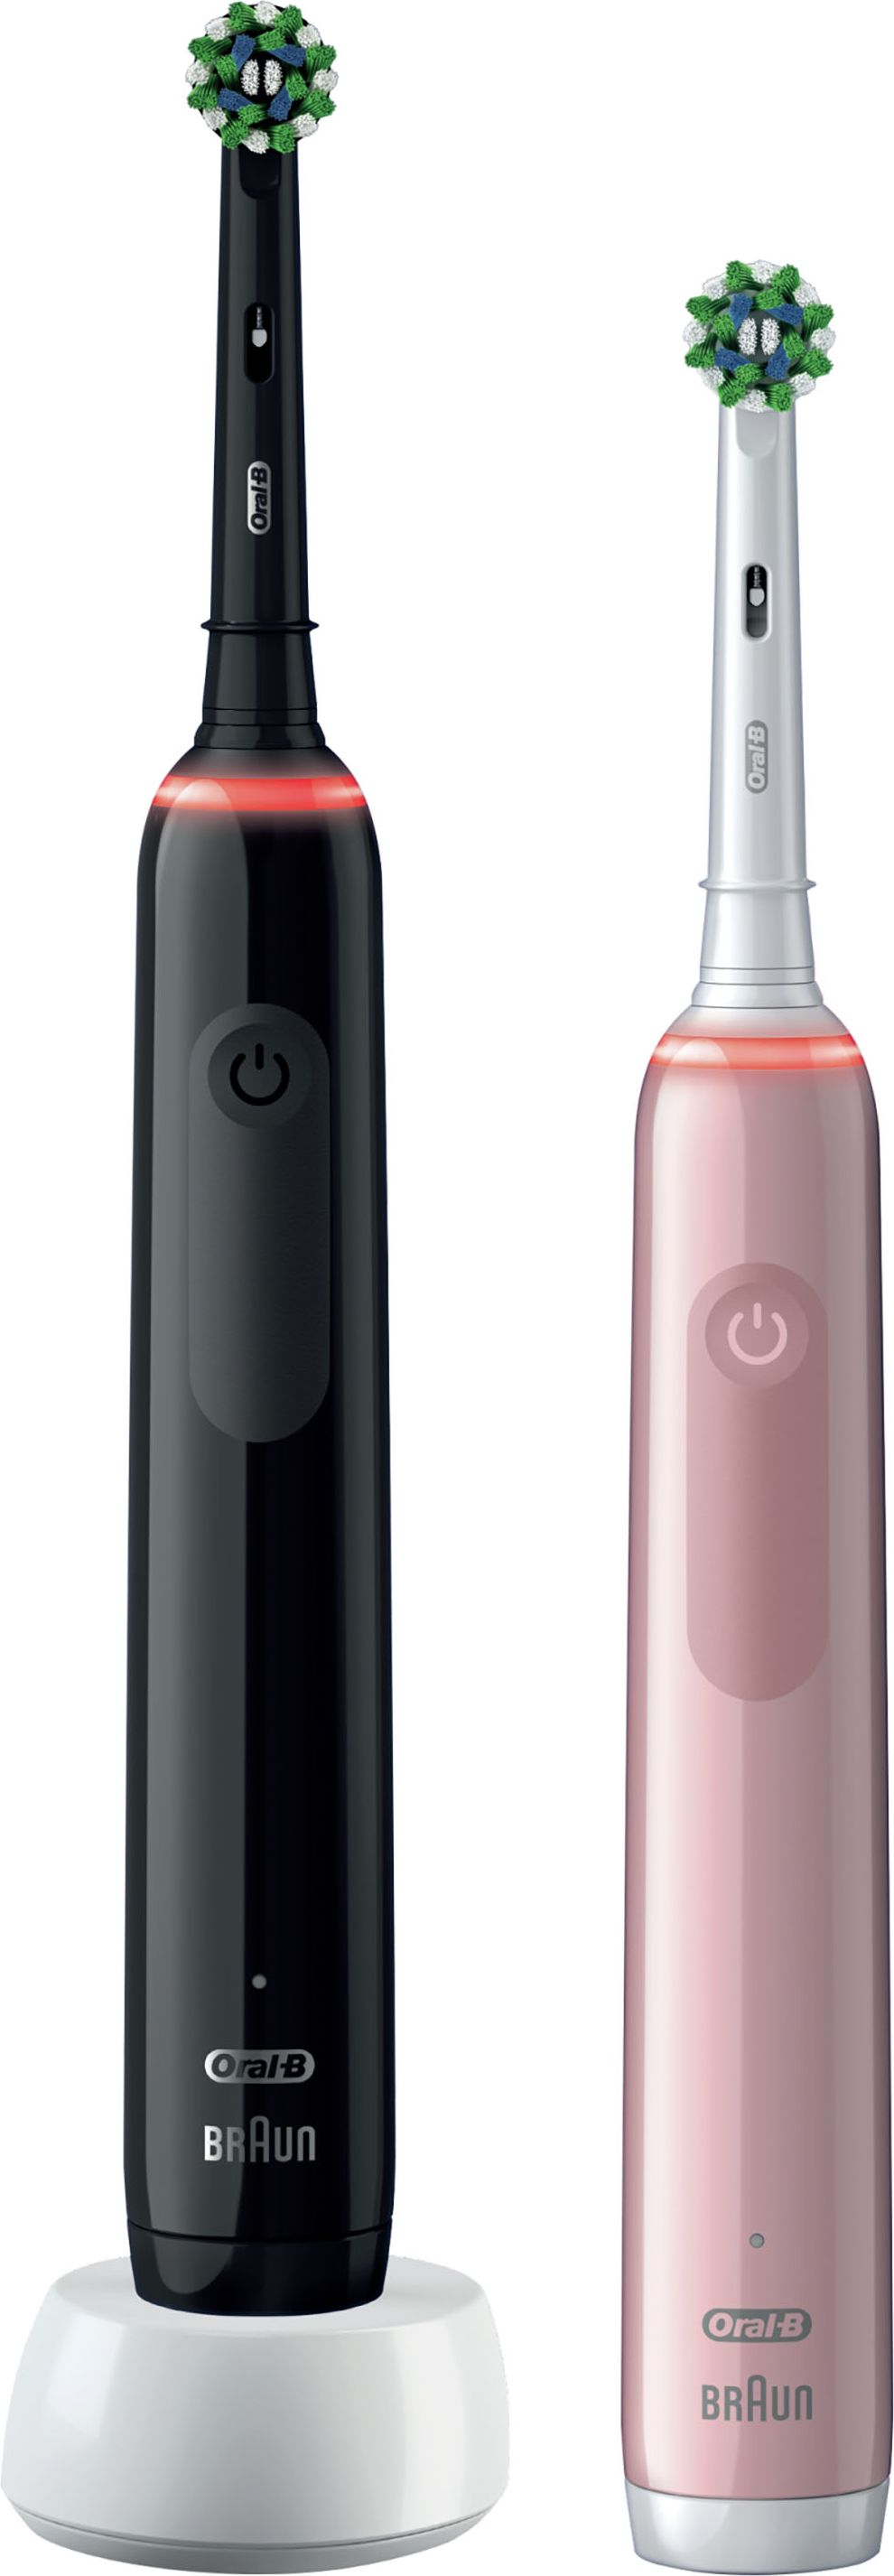 Oral B Pro 3 3900 Electric Toothbrush 2 Pack - Black / Pink, Black